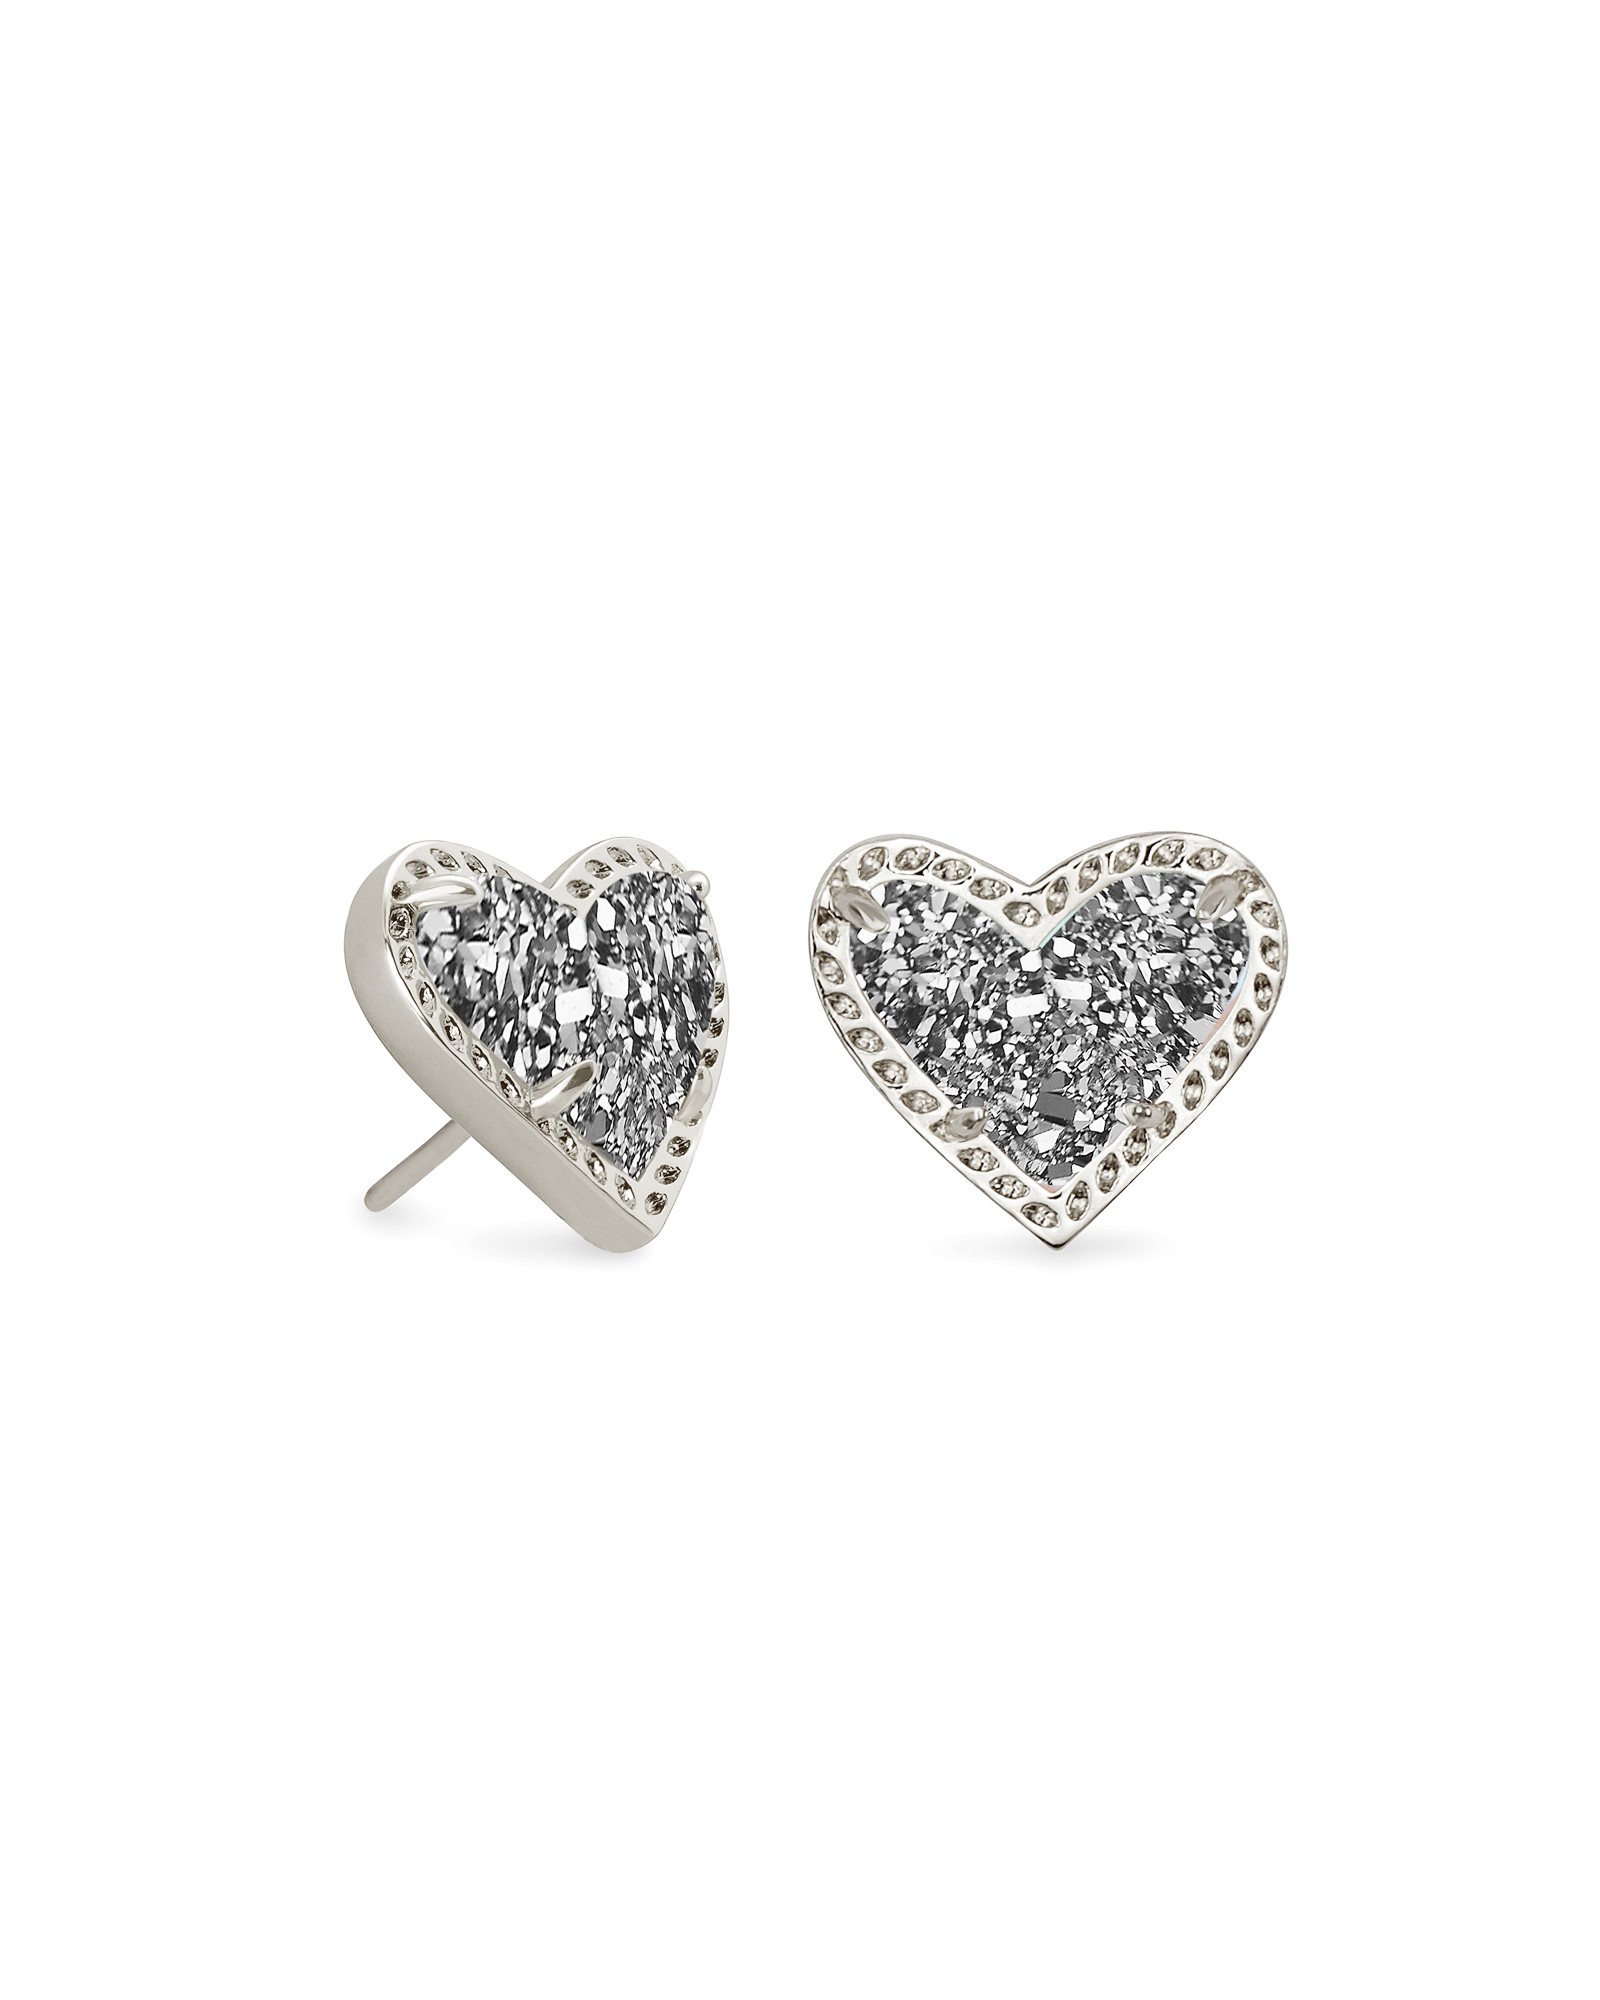 Ari Heart Silver Stud Earrings in Platinum Drusy | Kendra Scott